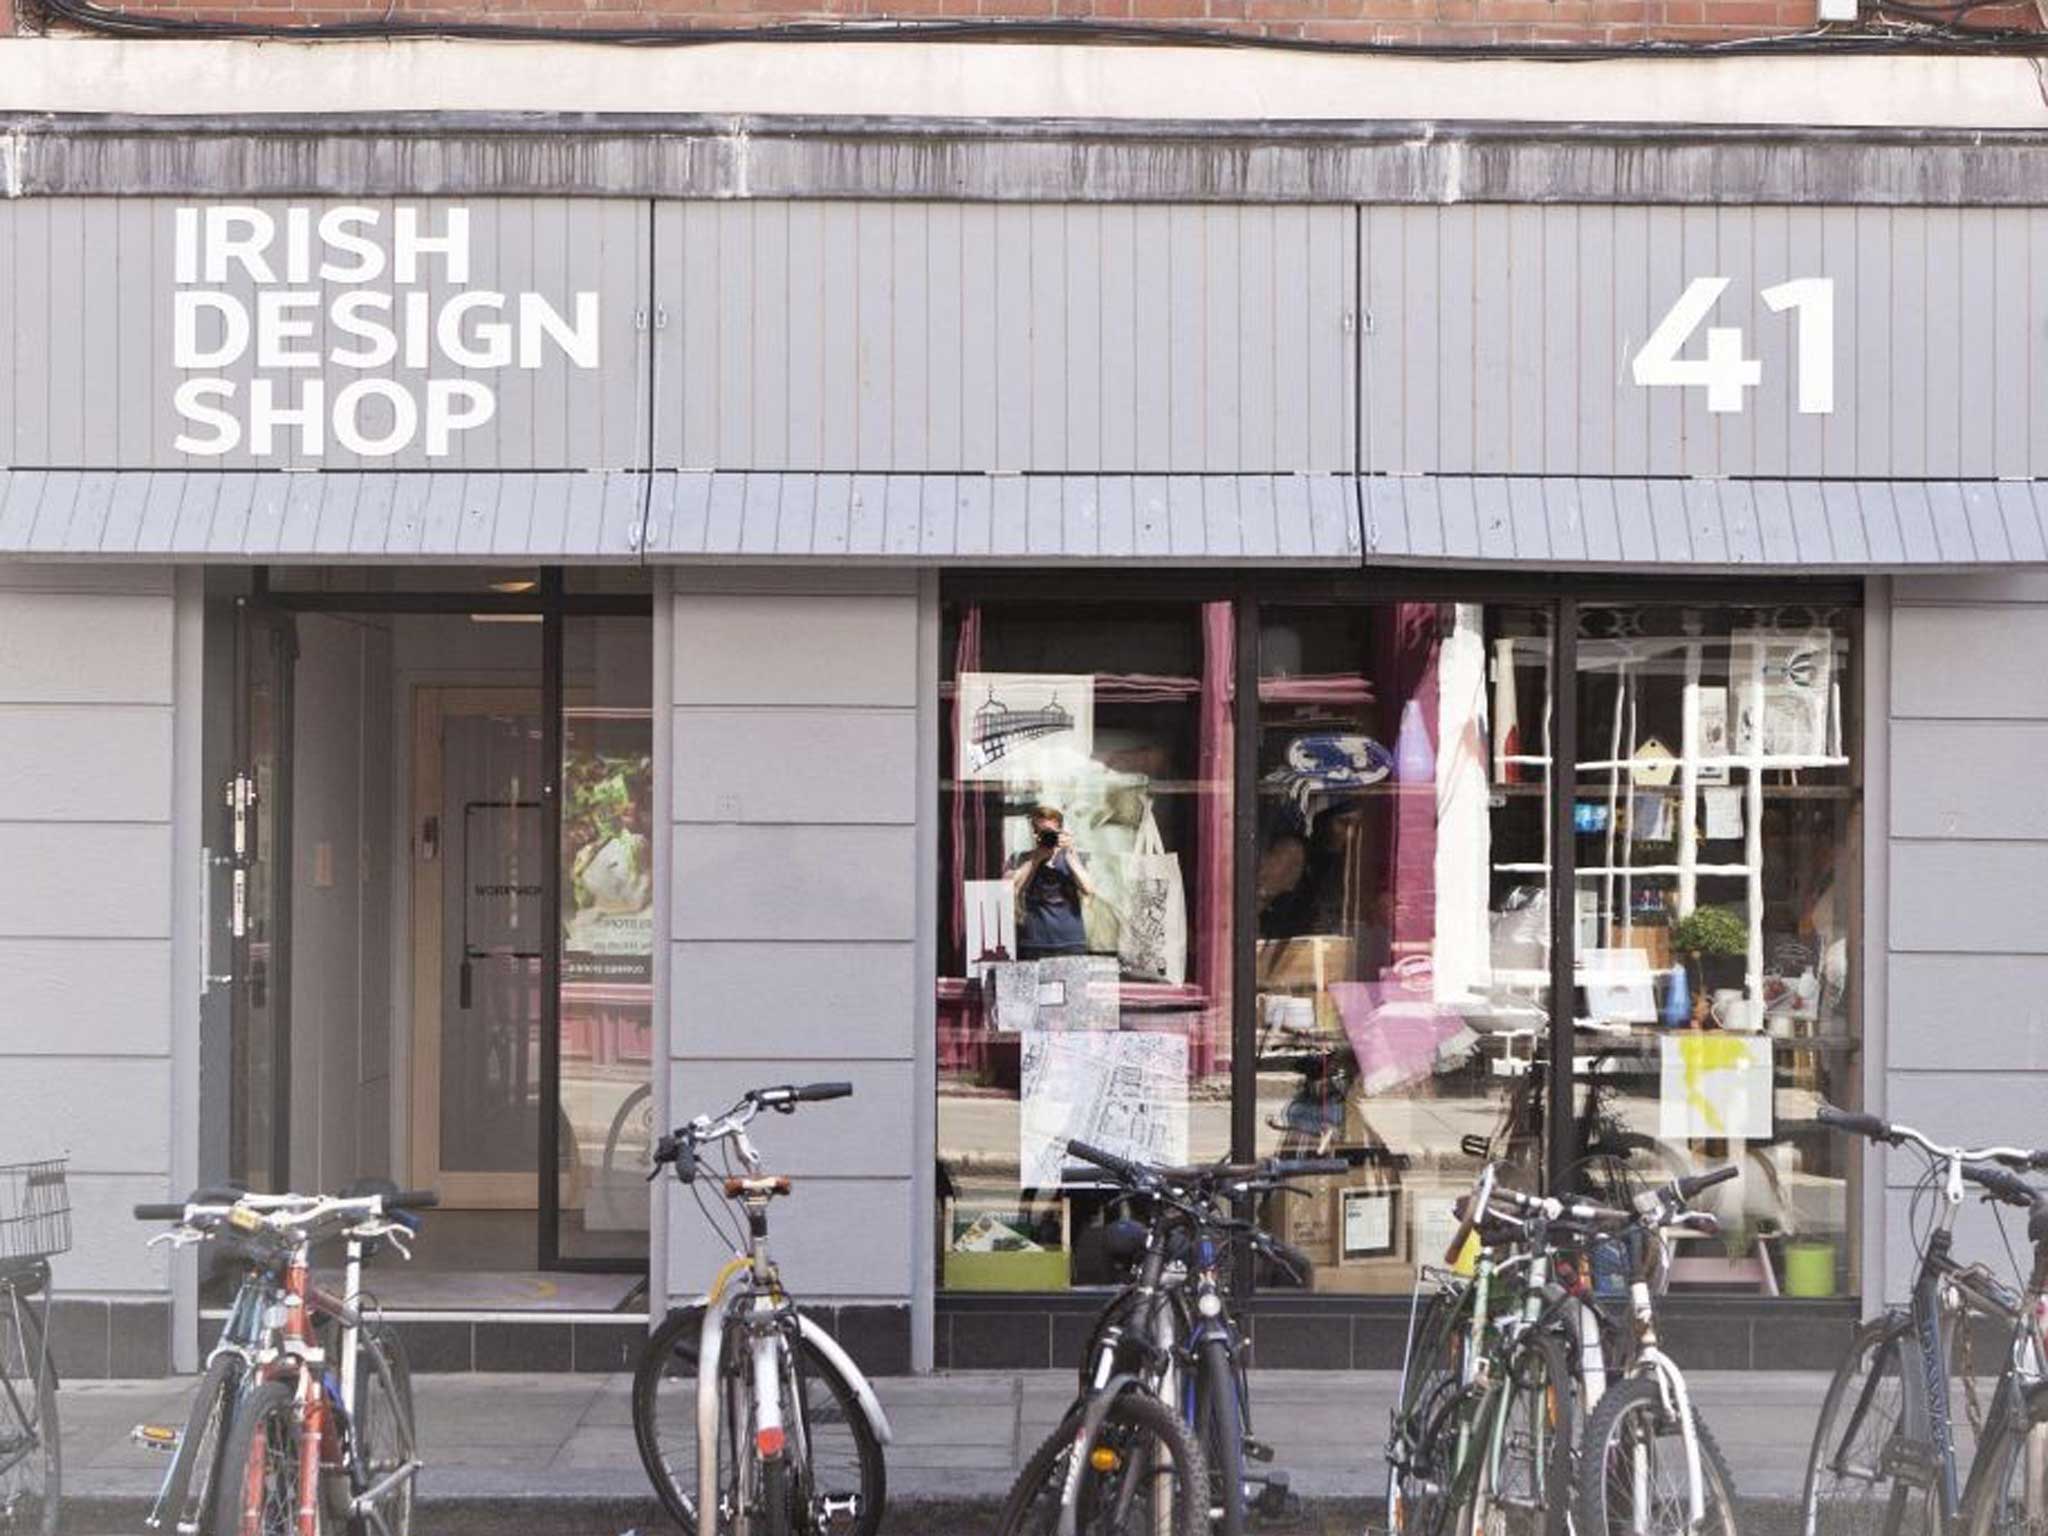 In with the new: Irish Design Shop showcases local designers